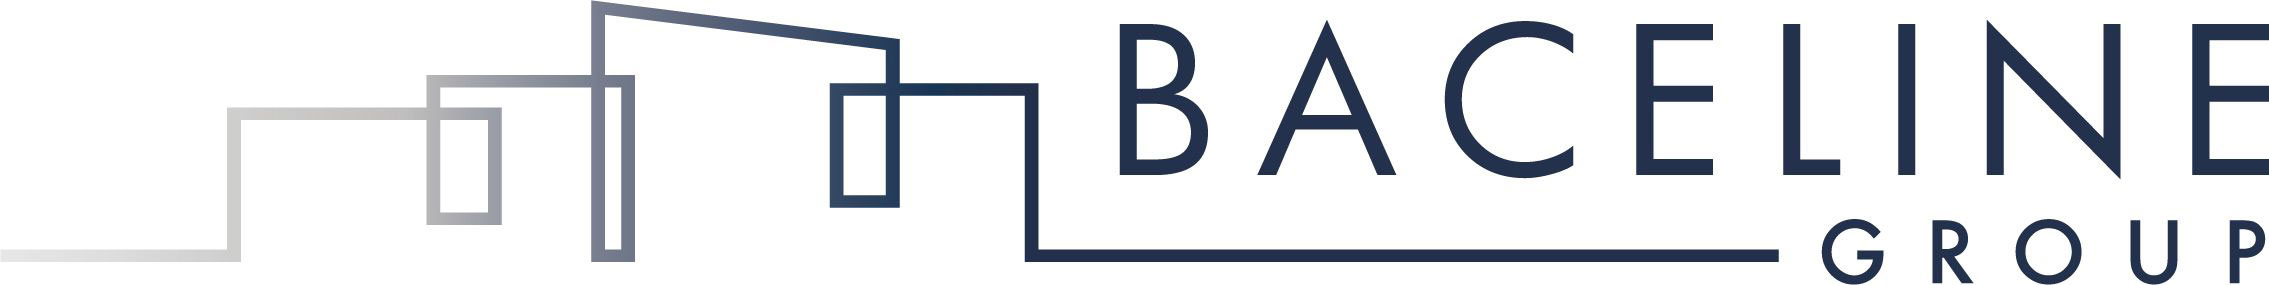 baceline group logo